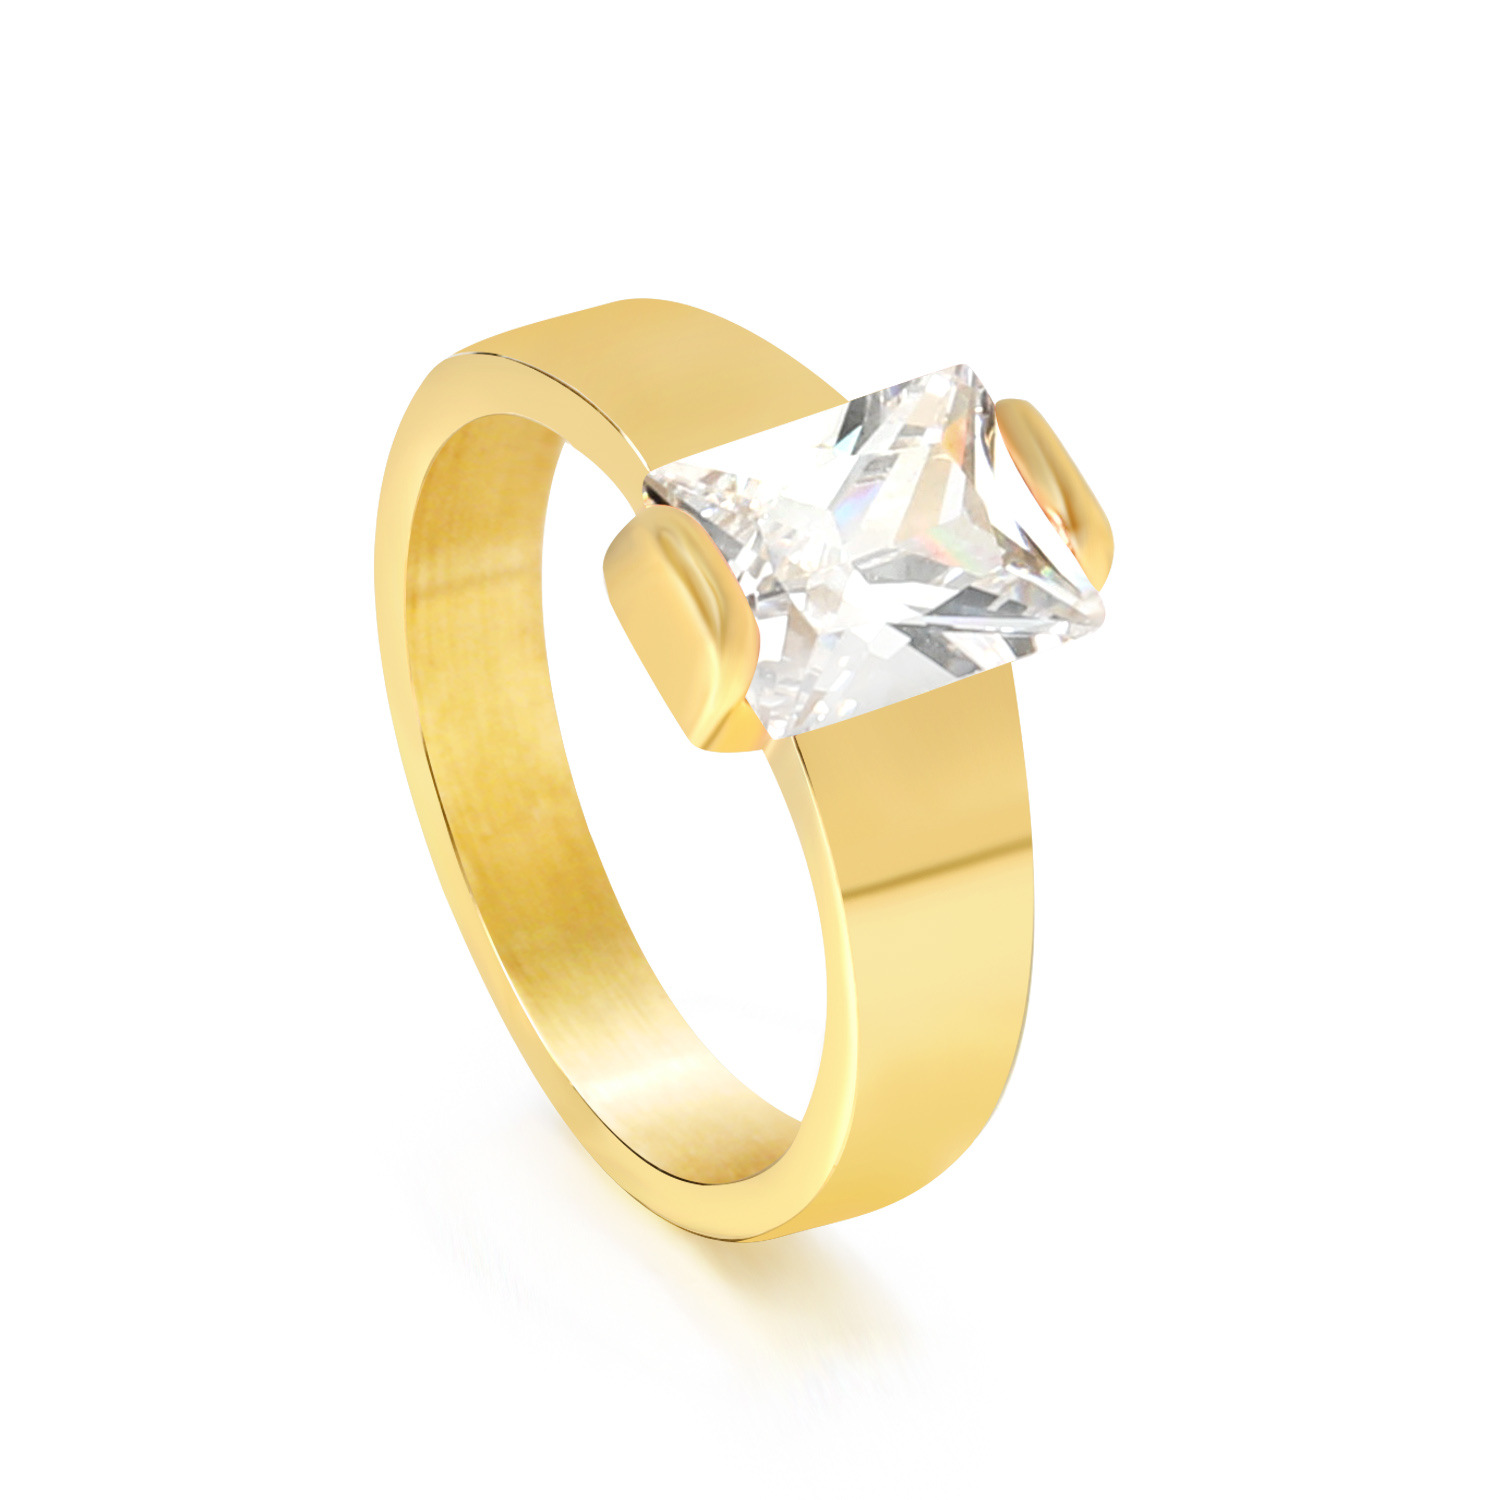 White diamond ring Gold RI1455A6-9G